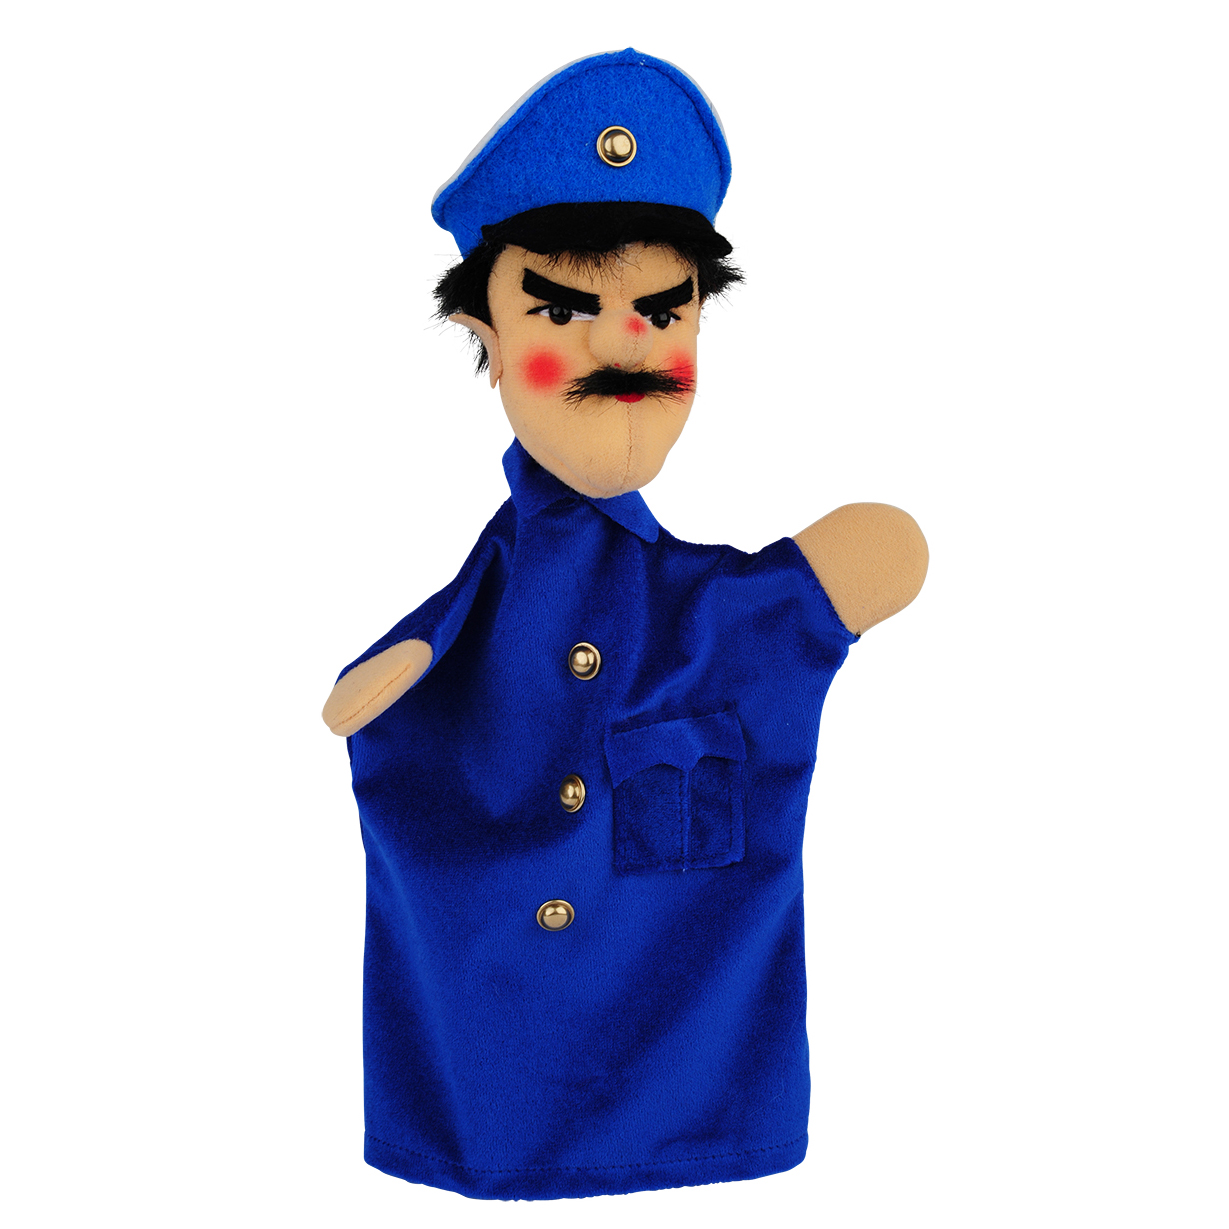 Handpuppe Polizist, blau - KERSA Classic